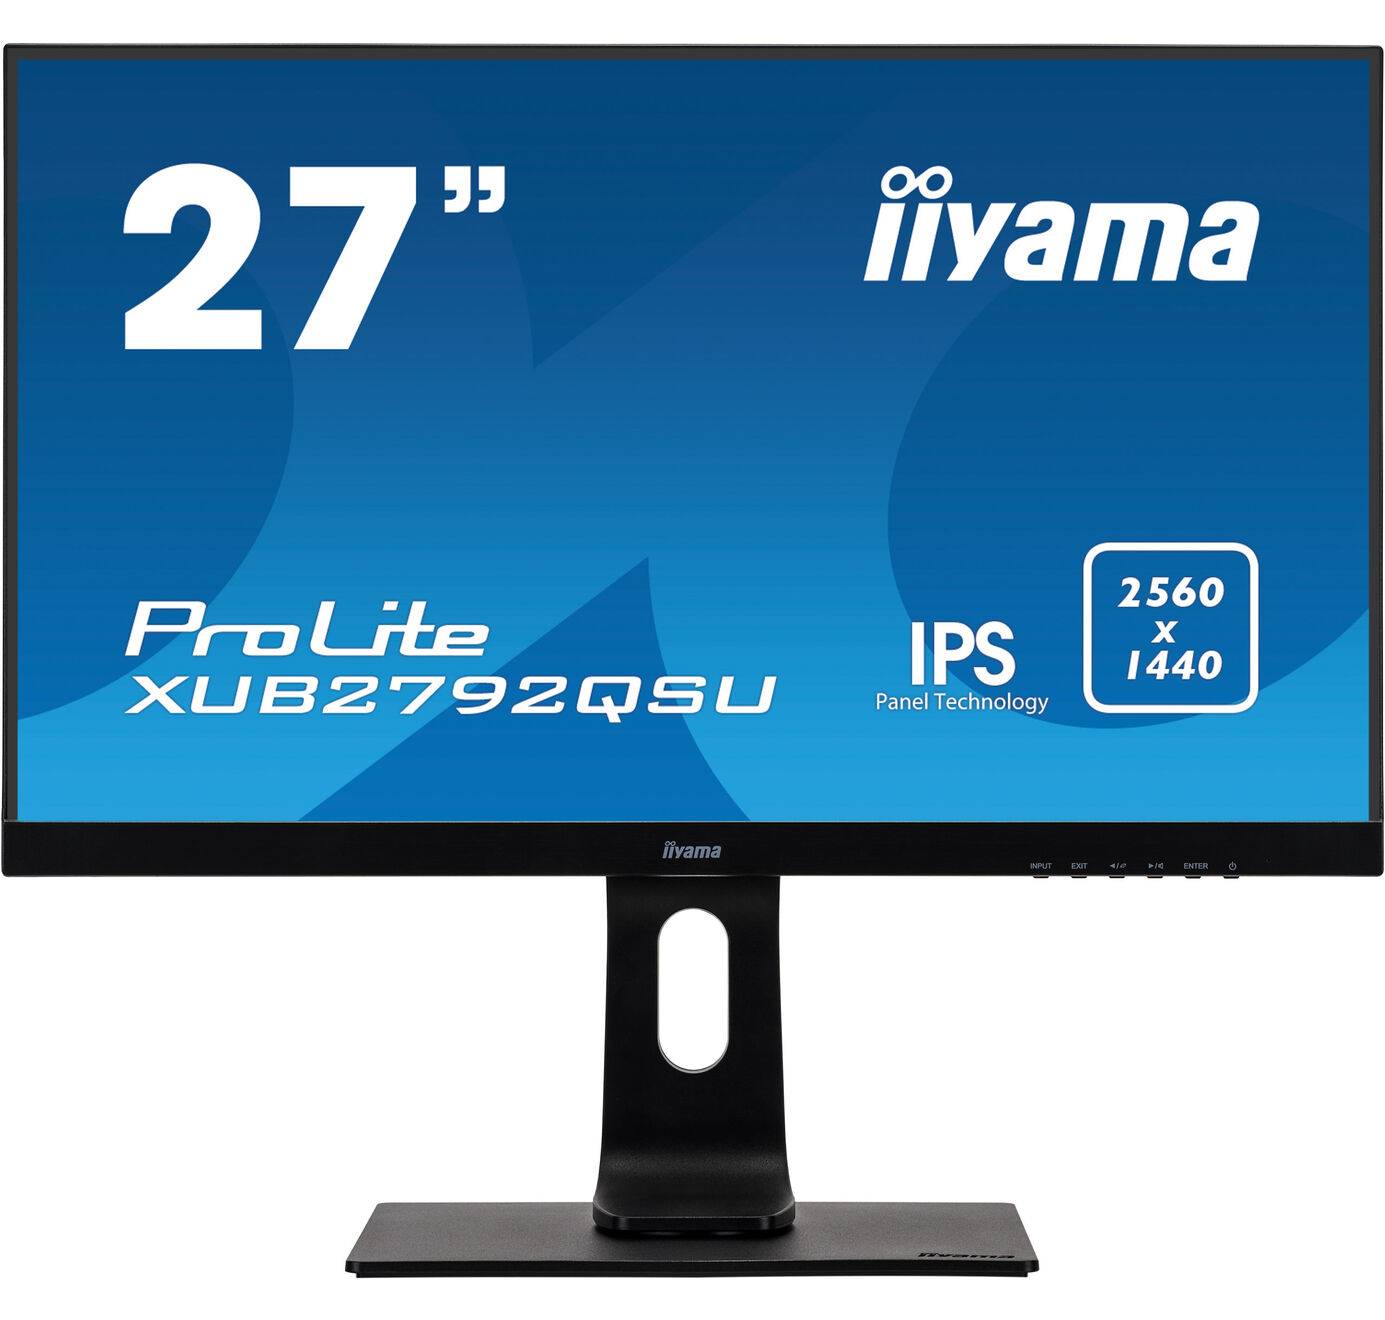 Rca Informatique - Image du produit : XUB2792QSU-B1 1000:1 DVI HDMI 27IN LCD 2560 X 1440 16:9 5MS